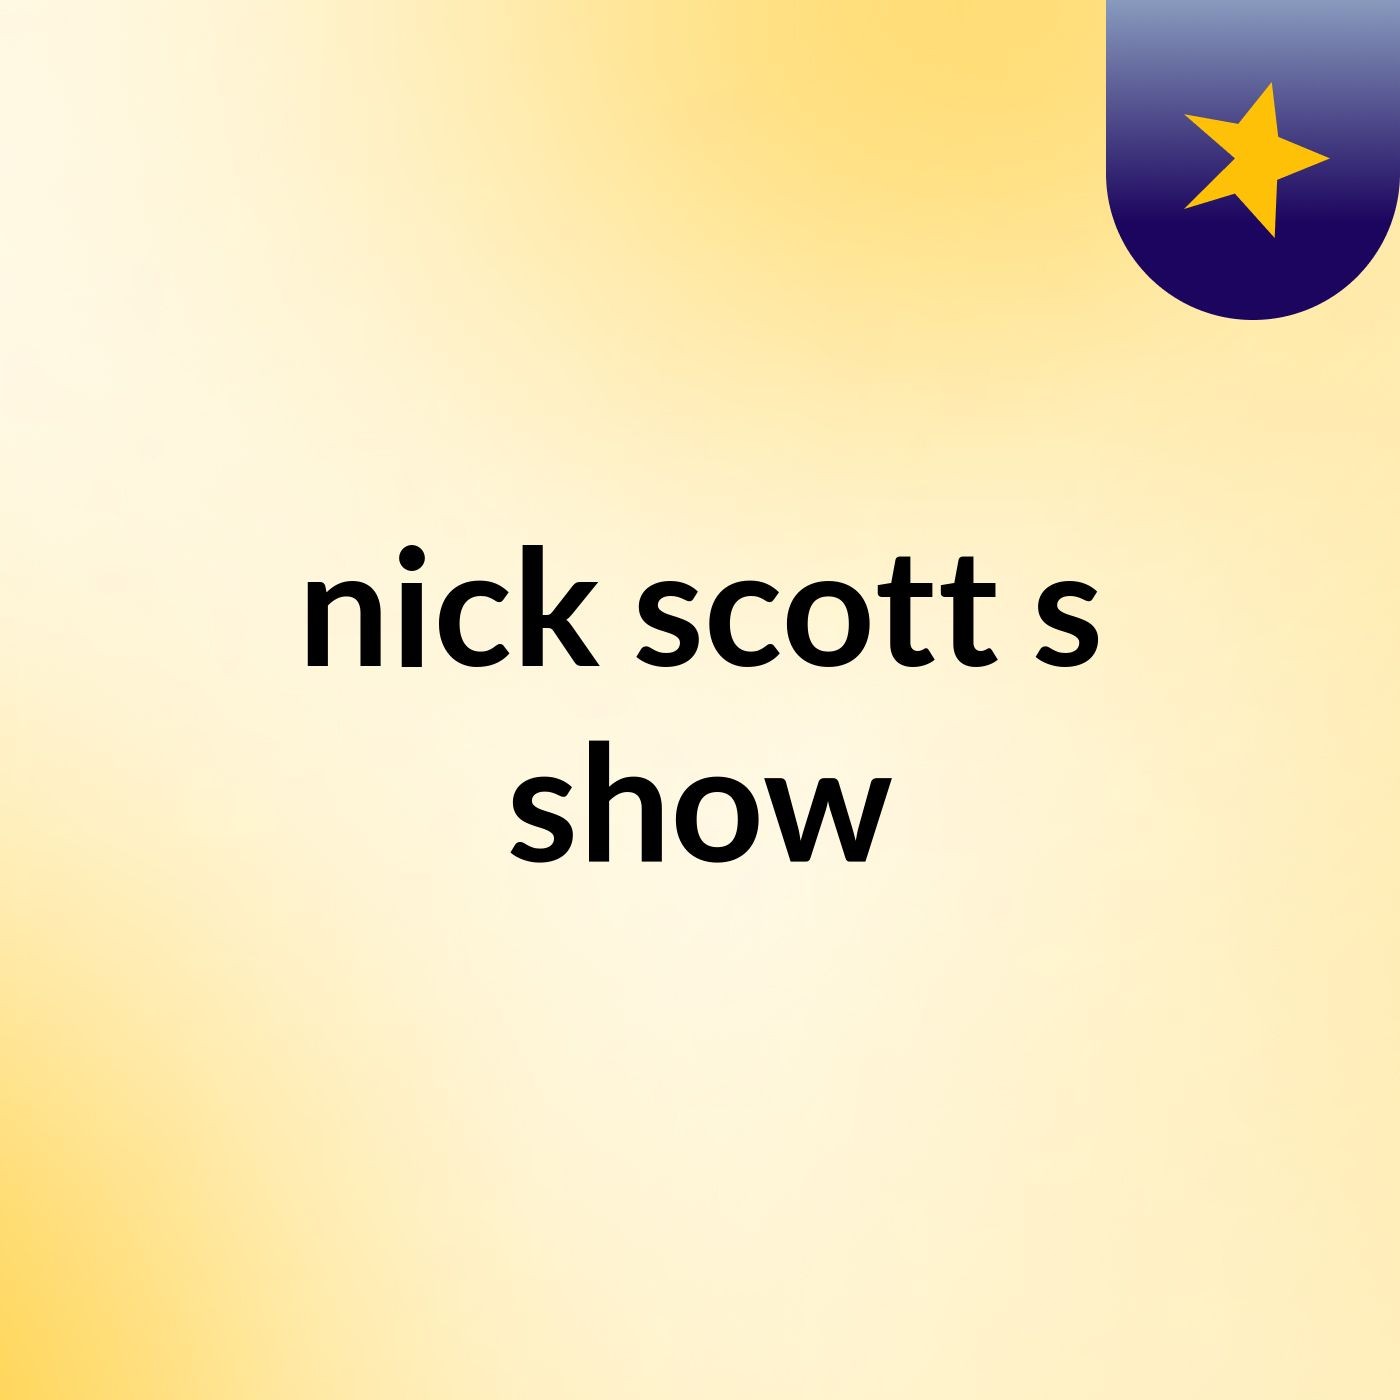 nick scott's show